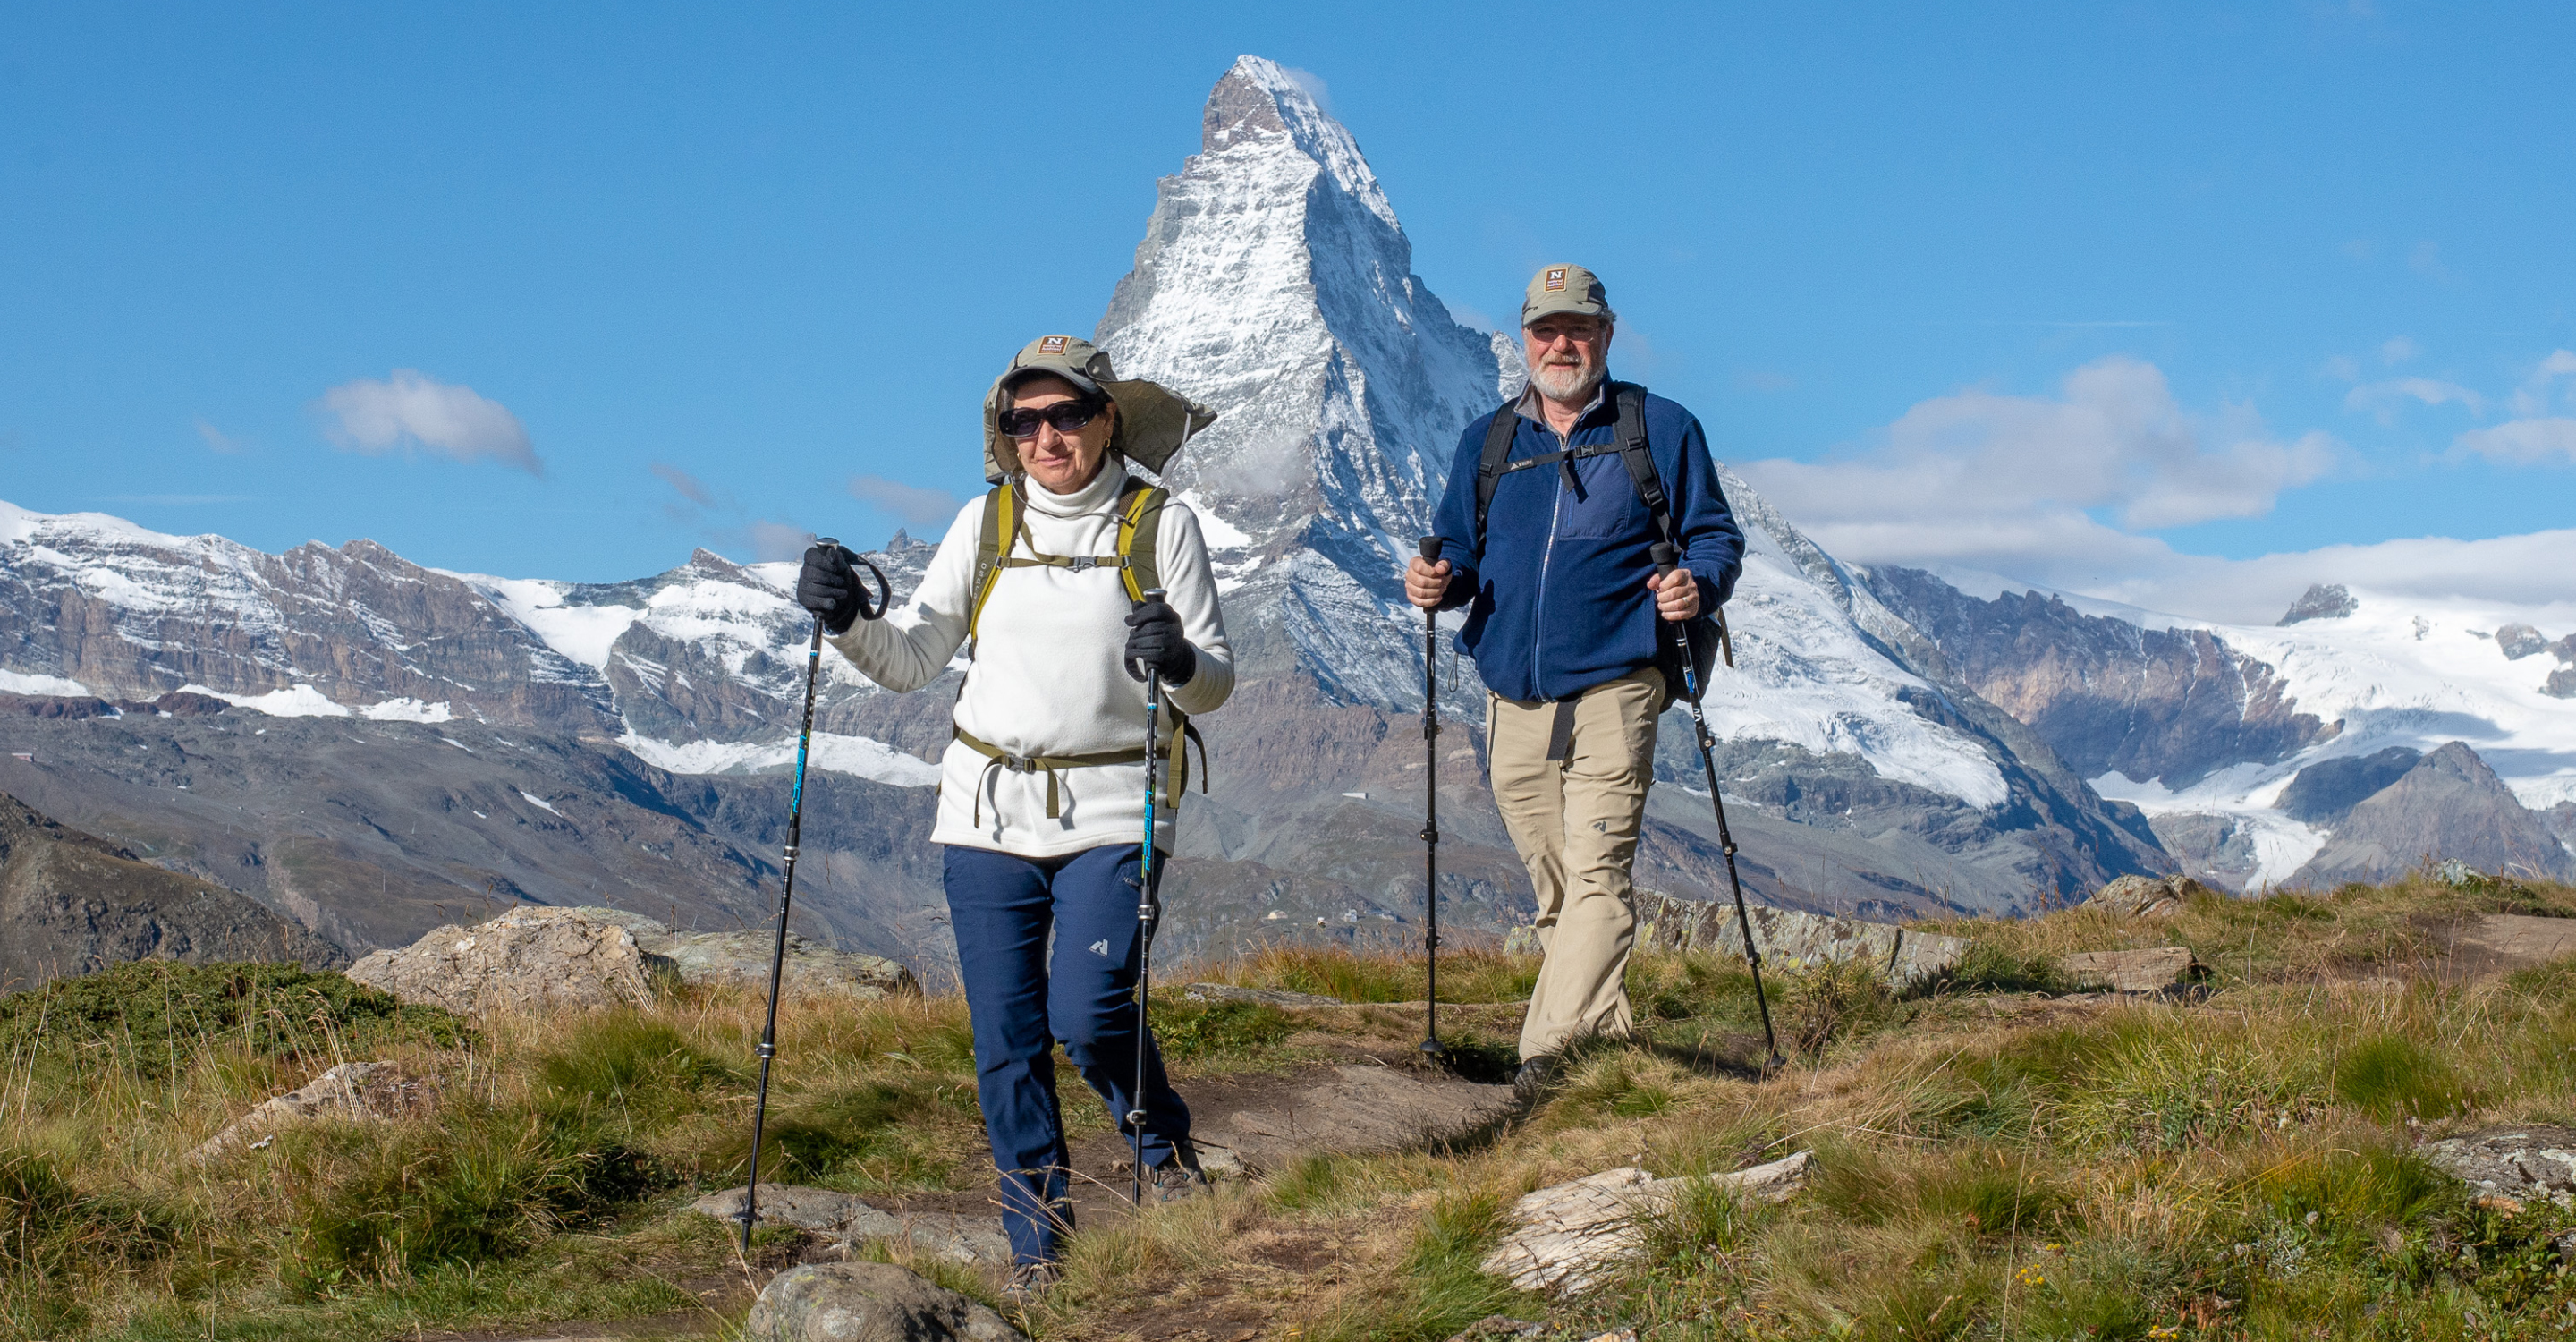 Two Natural Habitat Adventures travelers hiking in the Swiss Alps in front of the Matterhorn, Switzerland